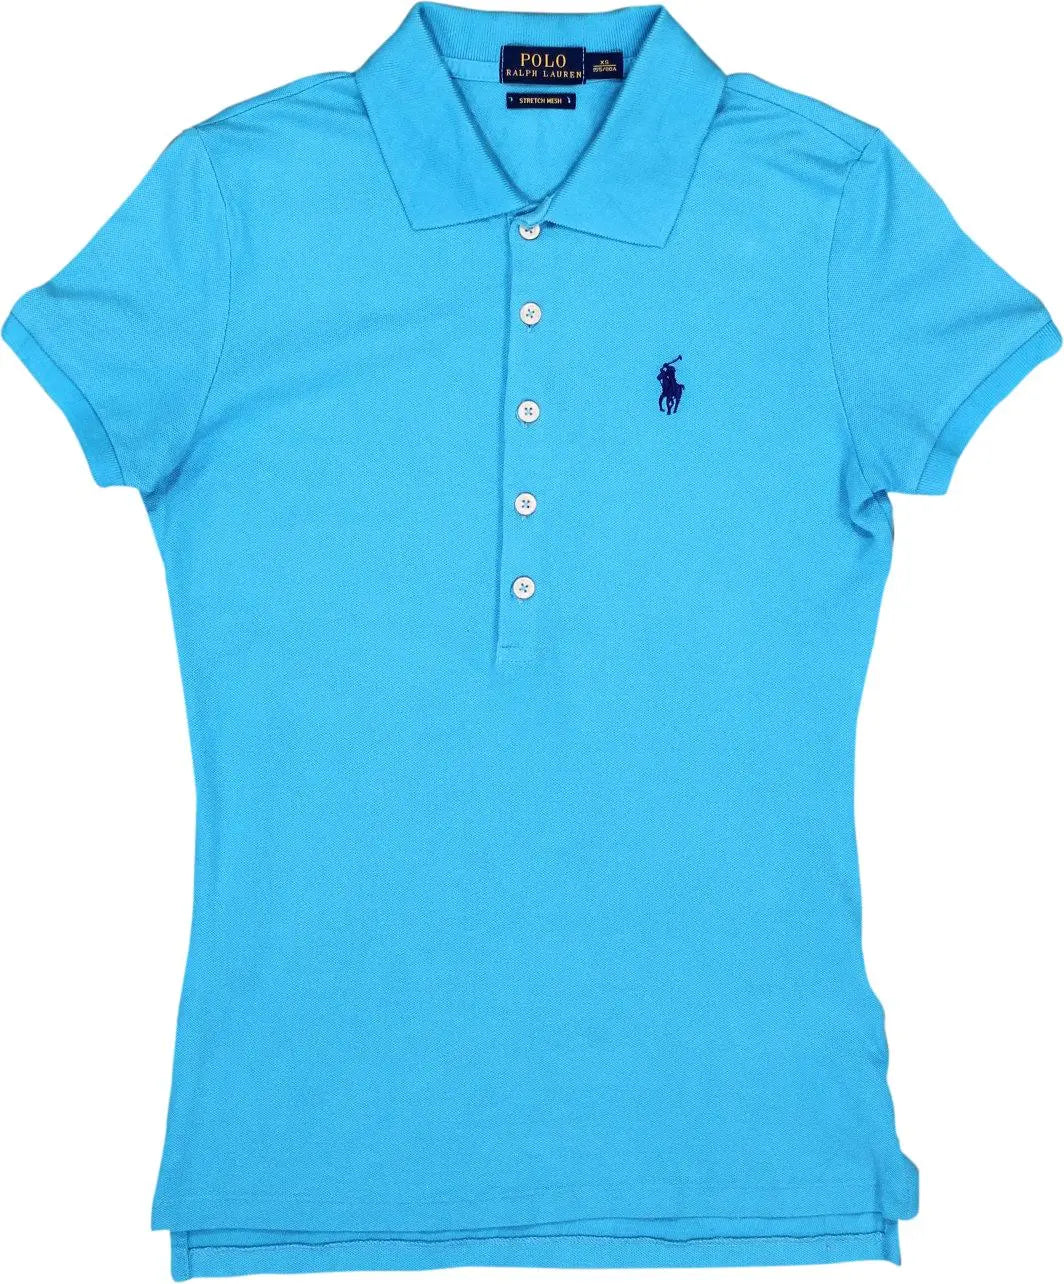 Ralph Lauren - Blue Polo Shirt by Ralph Lauren- ThriftTale.com - Vintage and second handclothing